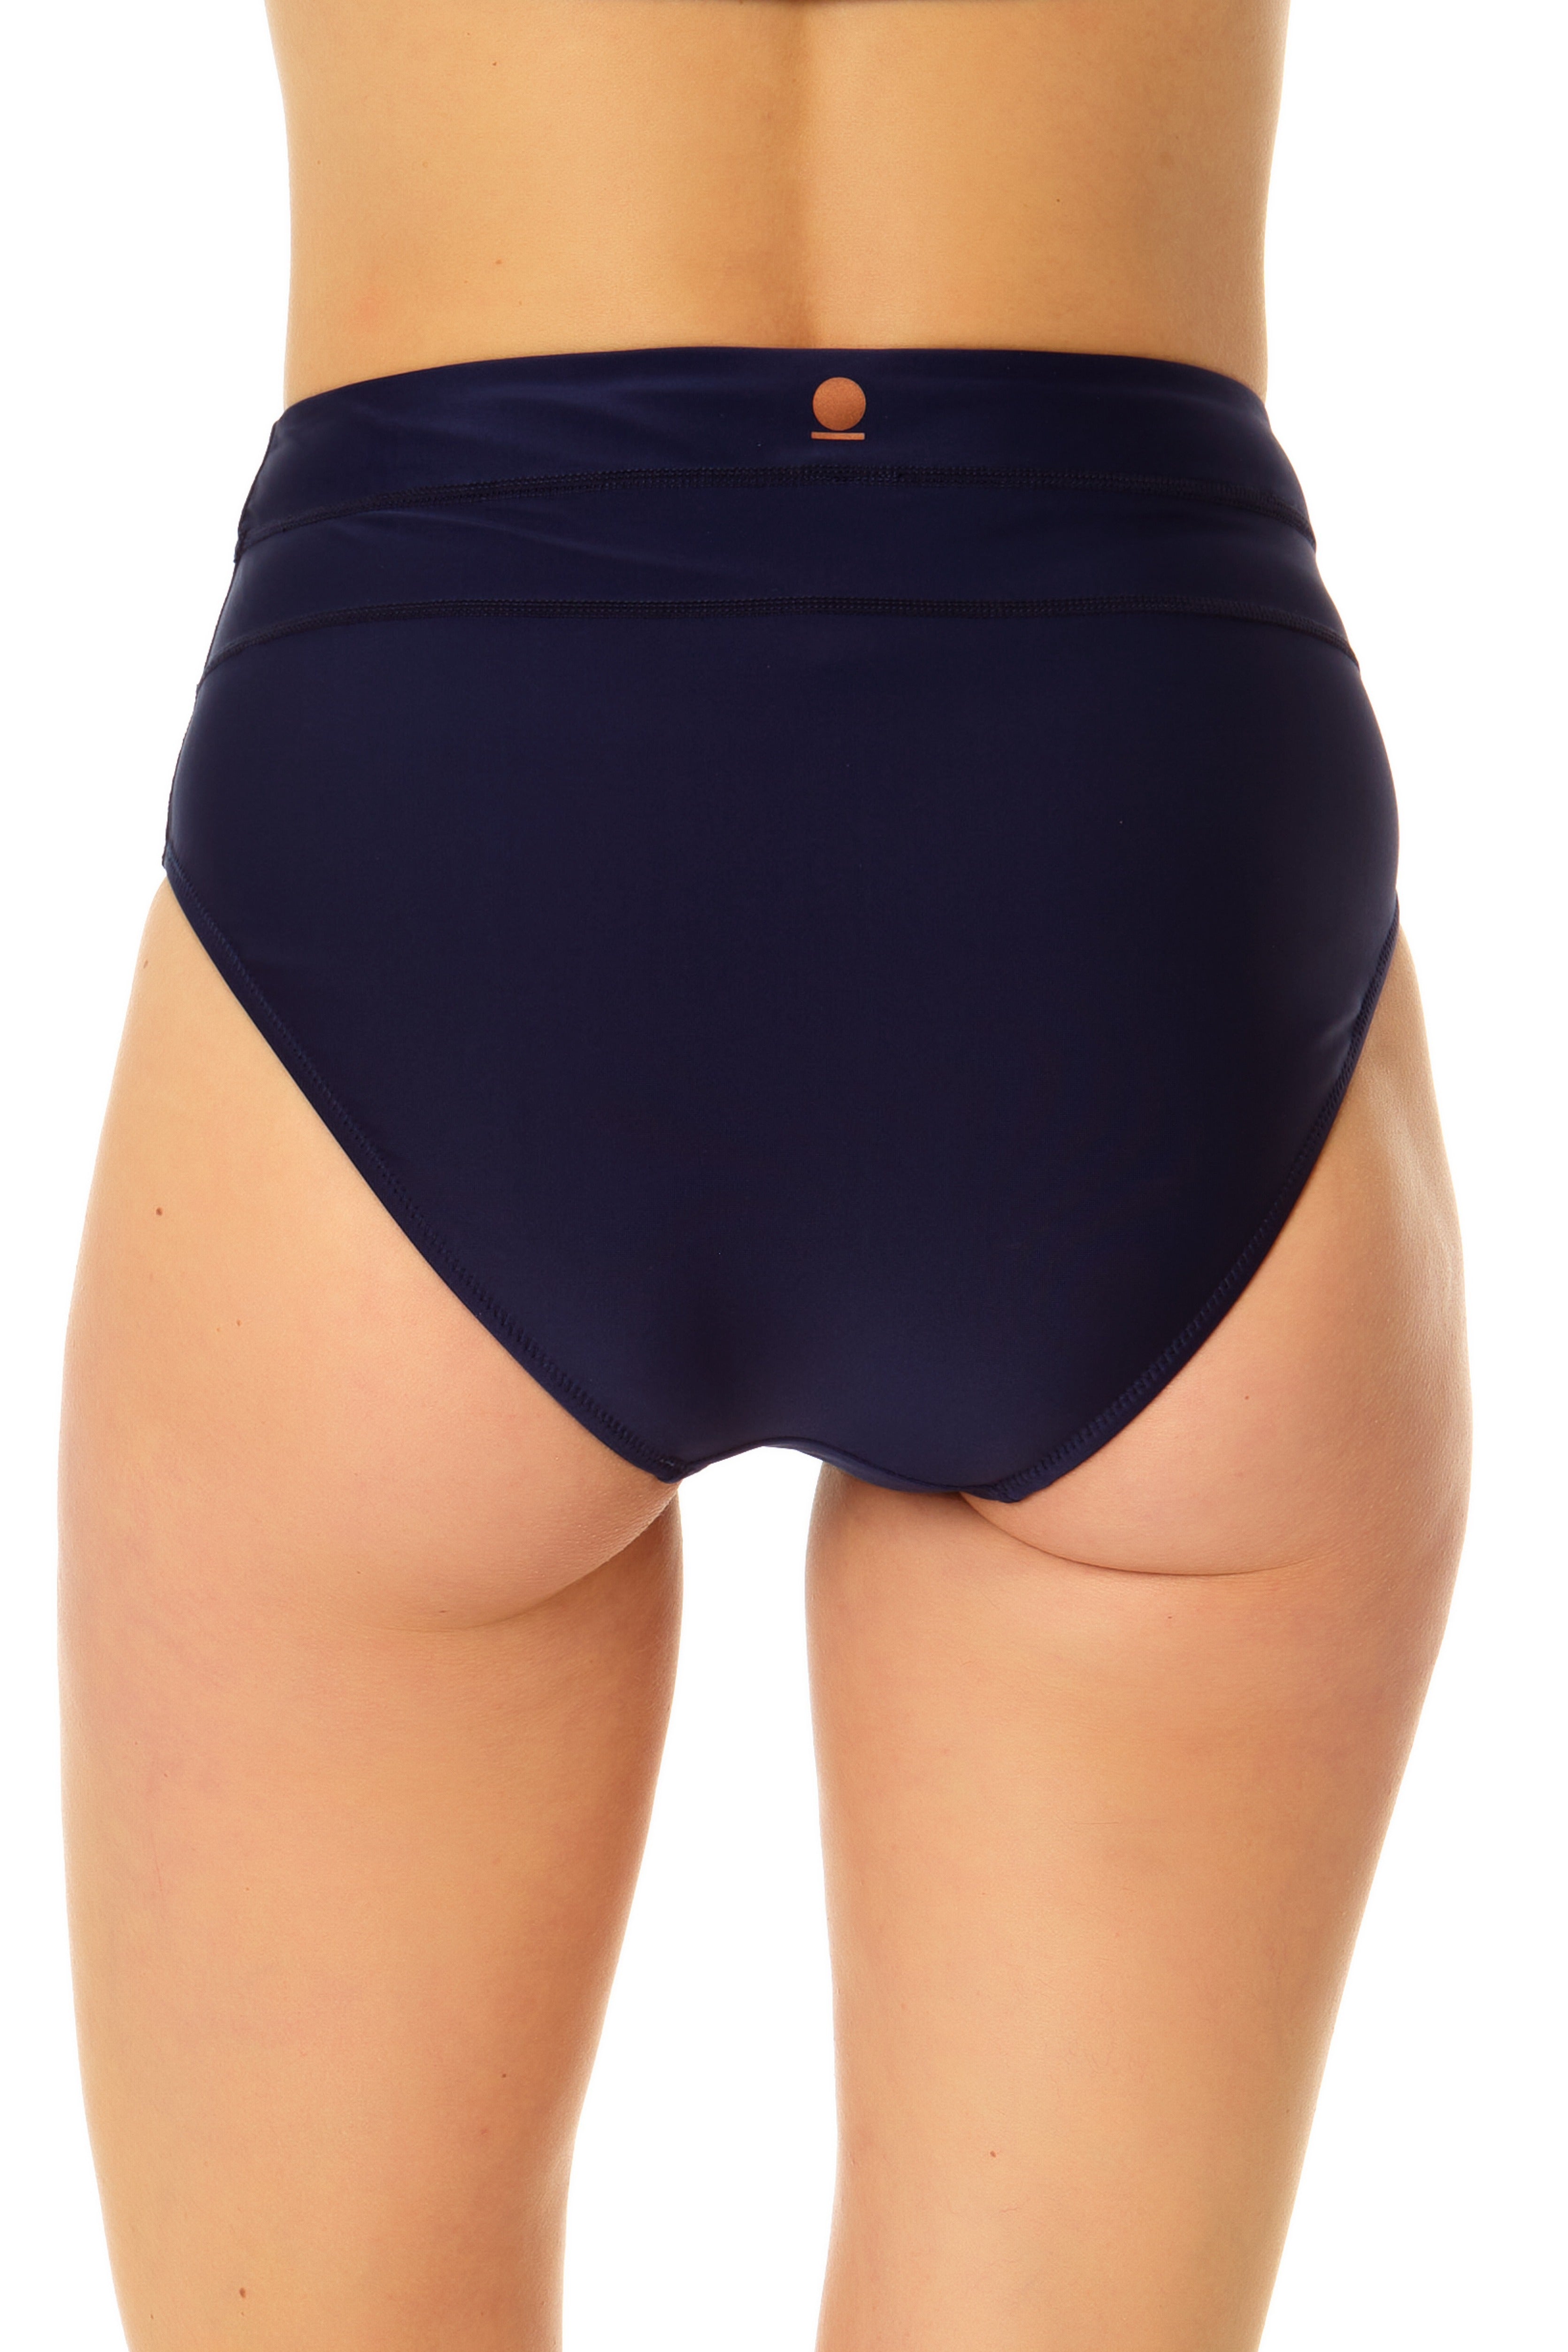 Women's Ultra High Waisted Bikini Bottom Tummy Control Swimwear UPF50+  Swimsuit Brief